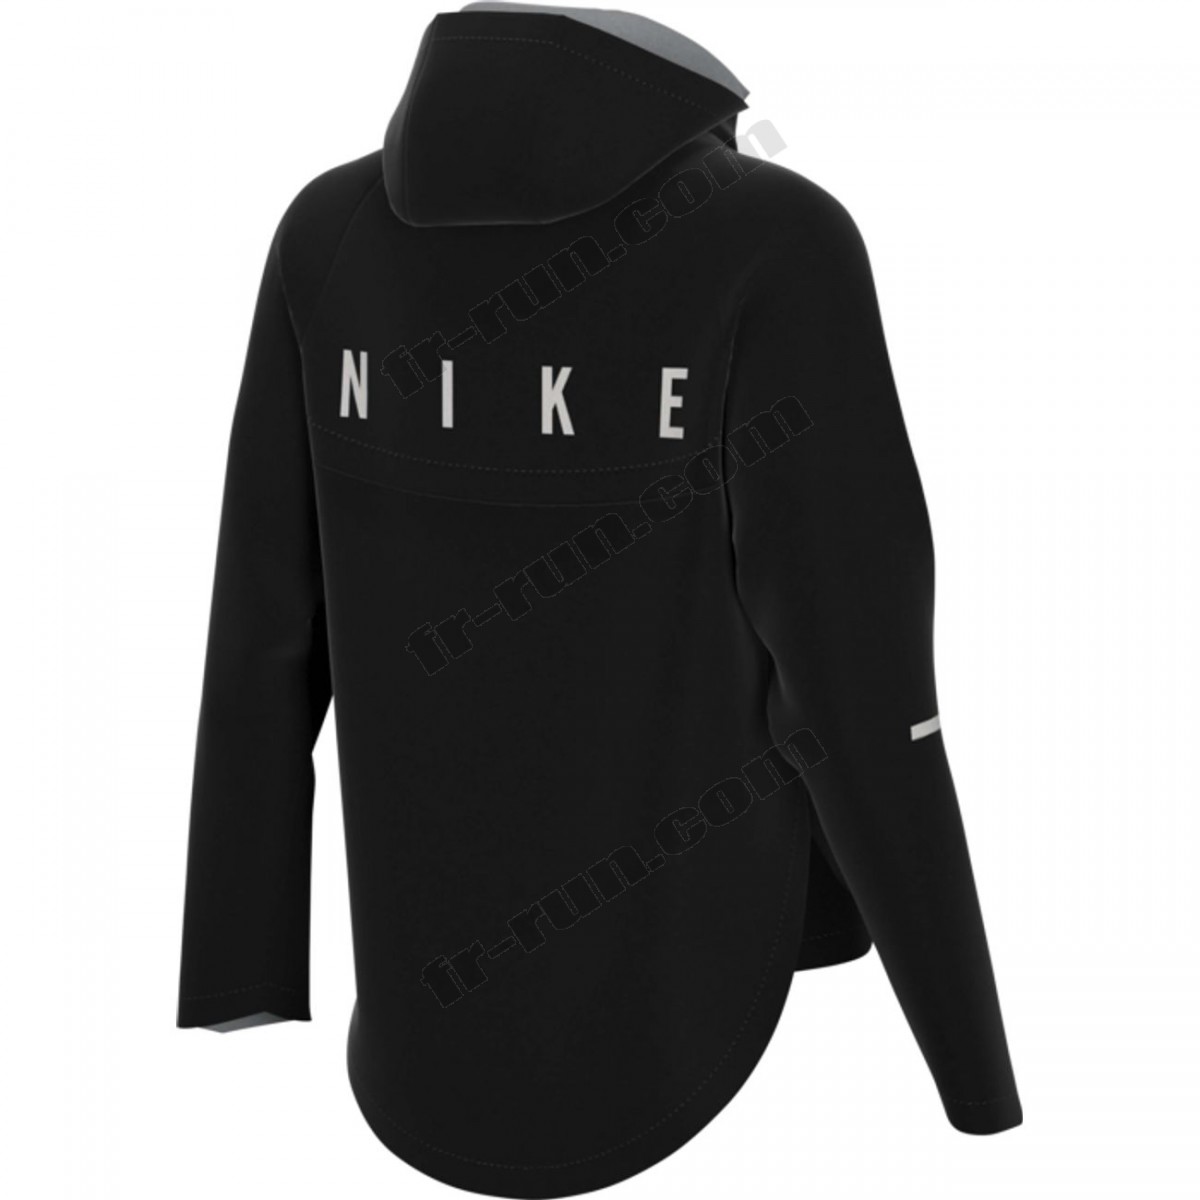 Nike/VESTE running femme NIKE RUN DVN ESSNTL √ Nouveau style √ Soldes - -1